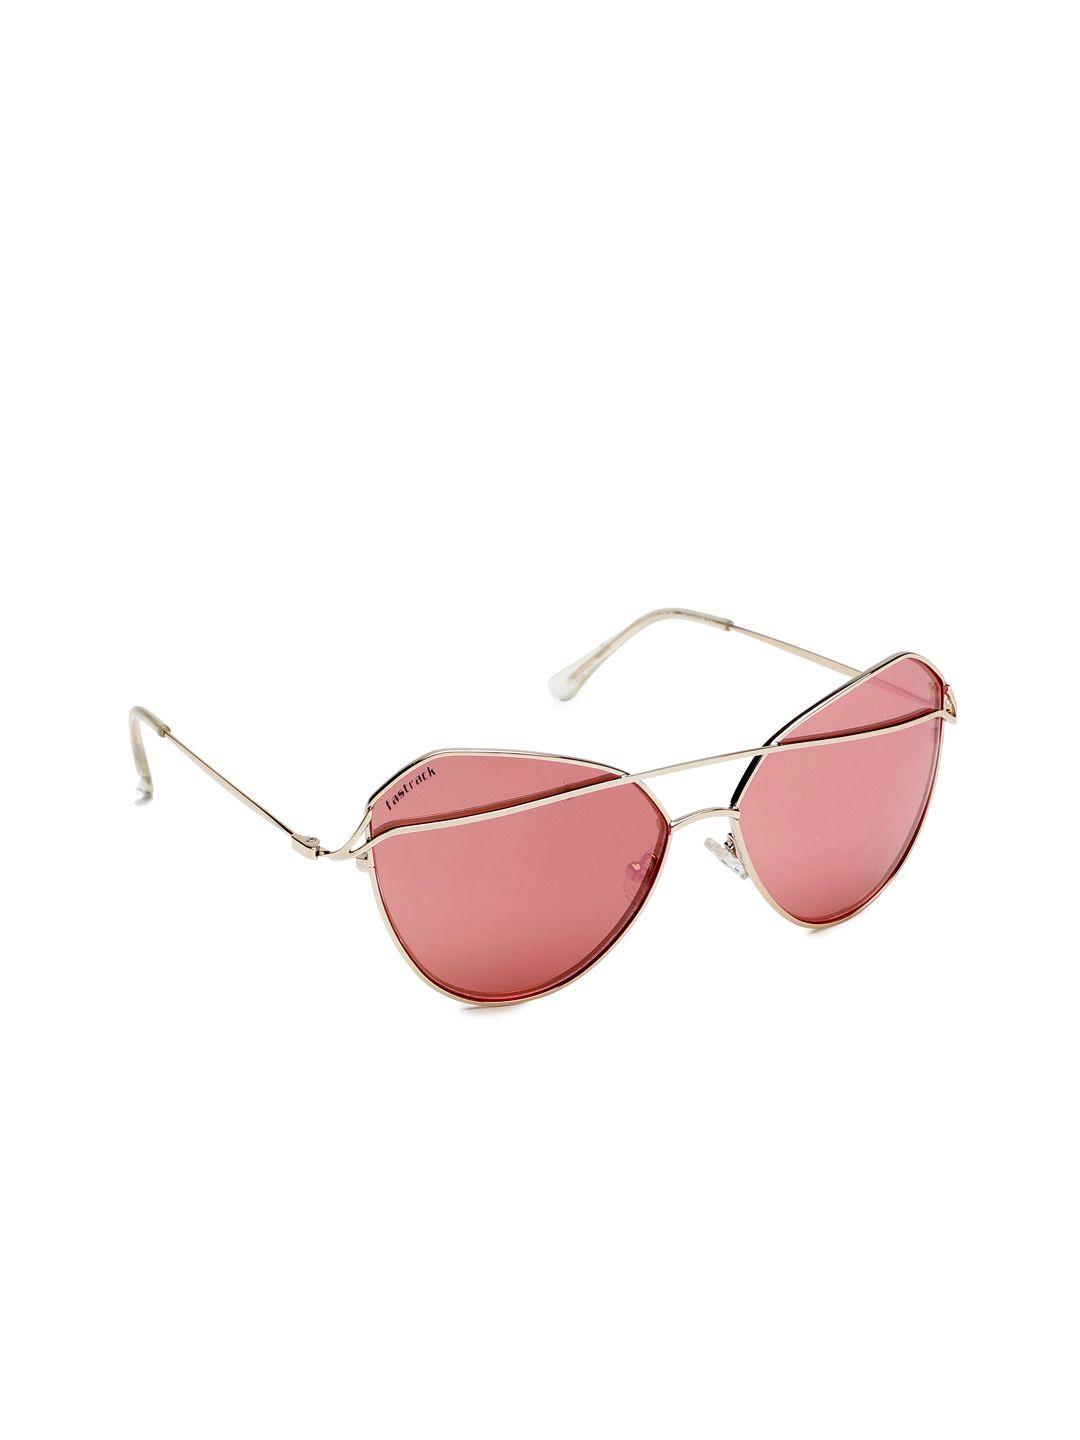 fastrack-women-oval-mirrored-sunglasses-nbm180pk1f